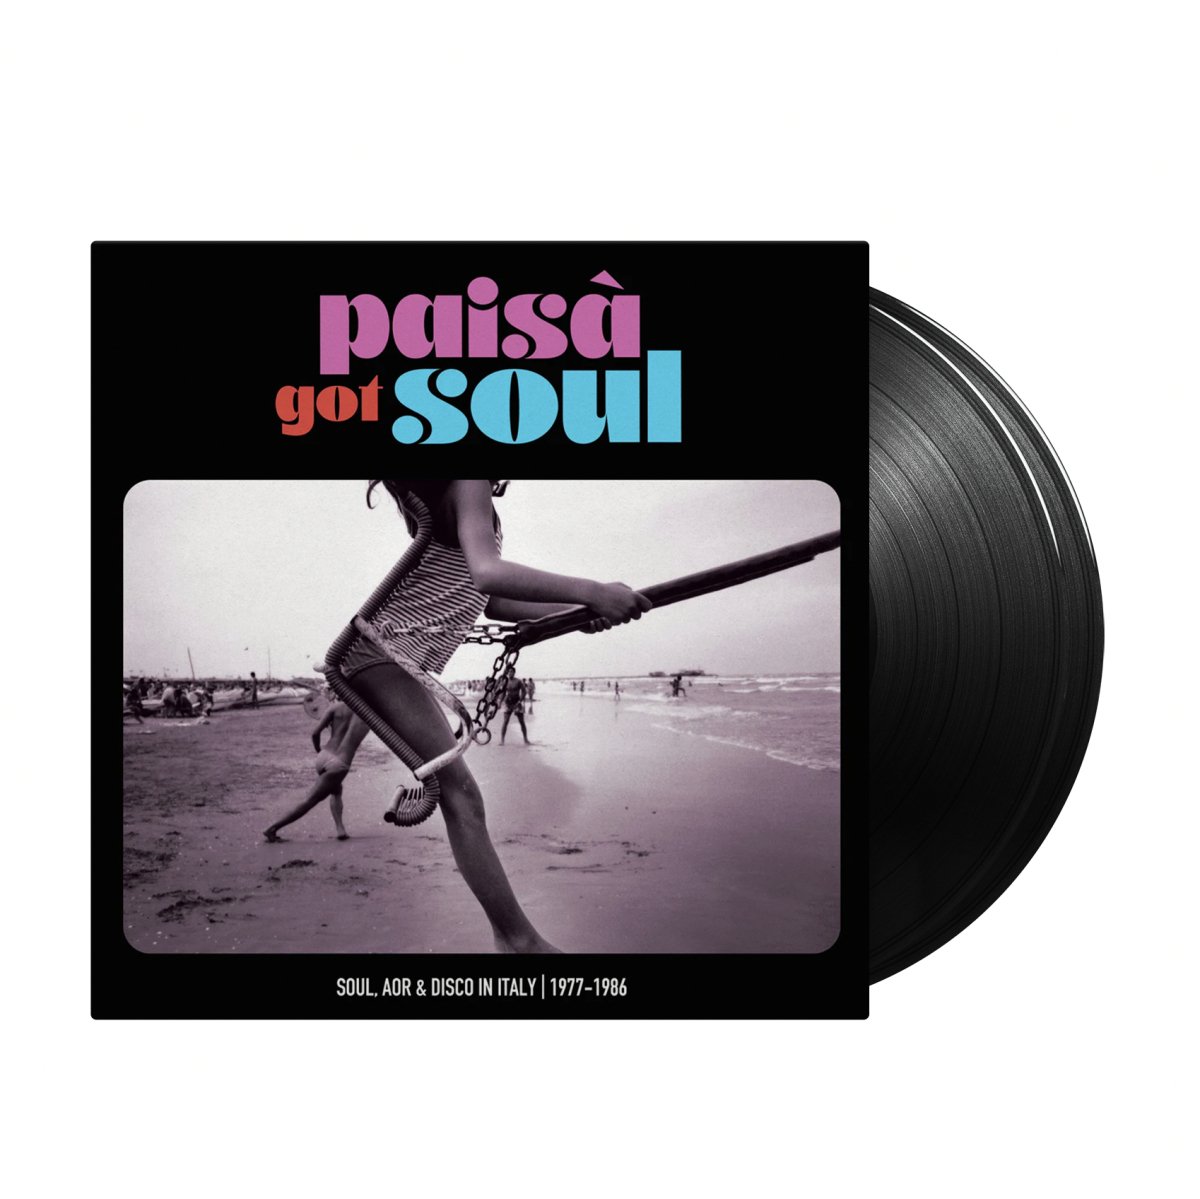 V/A PAISA’ GOT SOUL - Soul, AOR & Disco in Italy, 1977 to 1986 - Inner Ocean Records